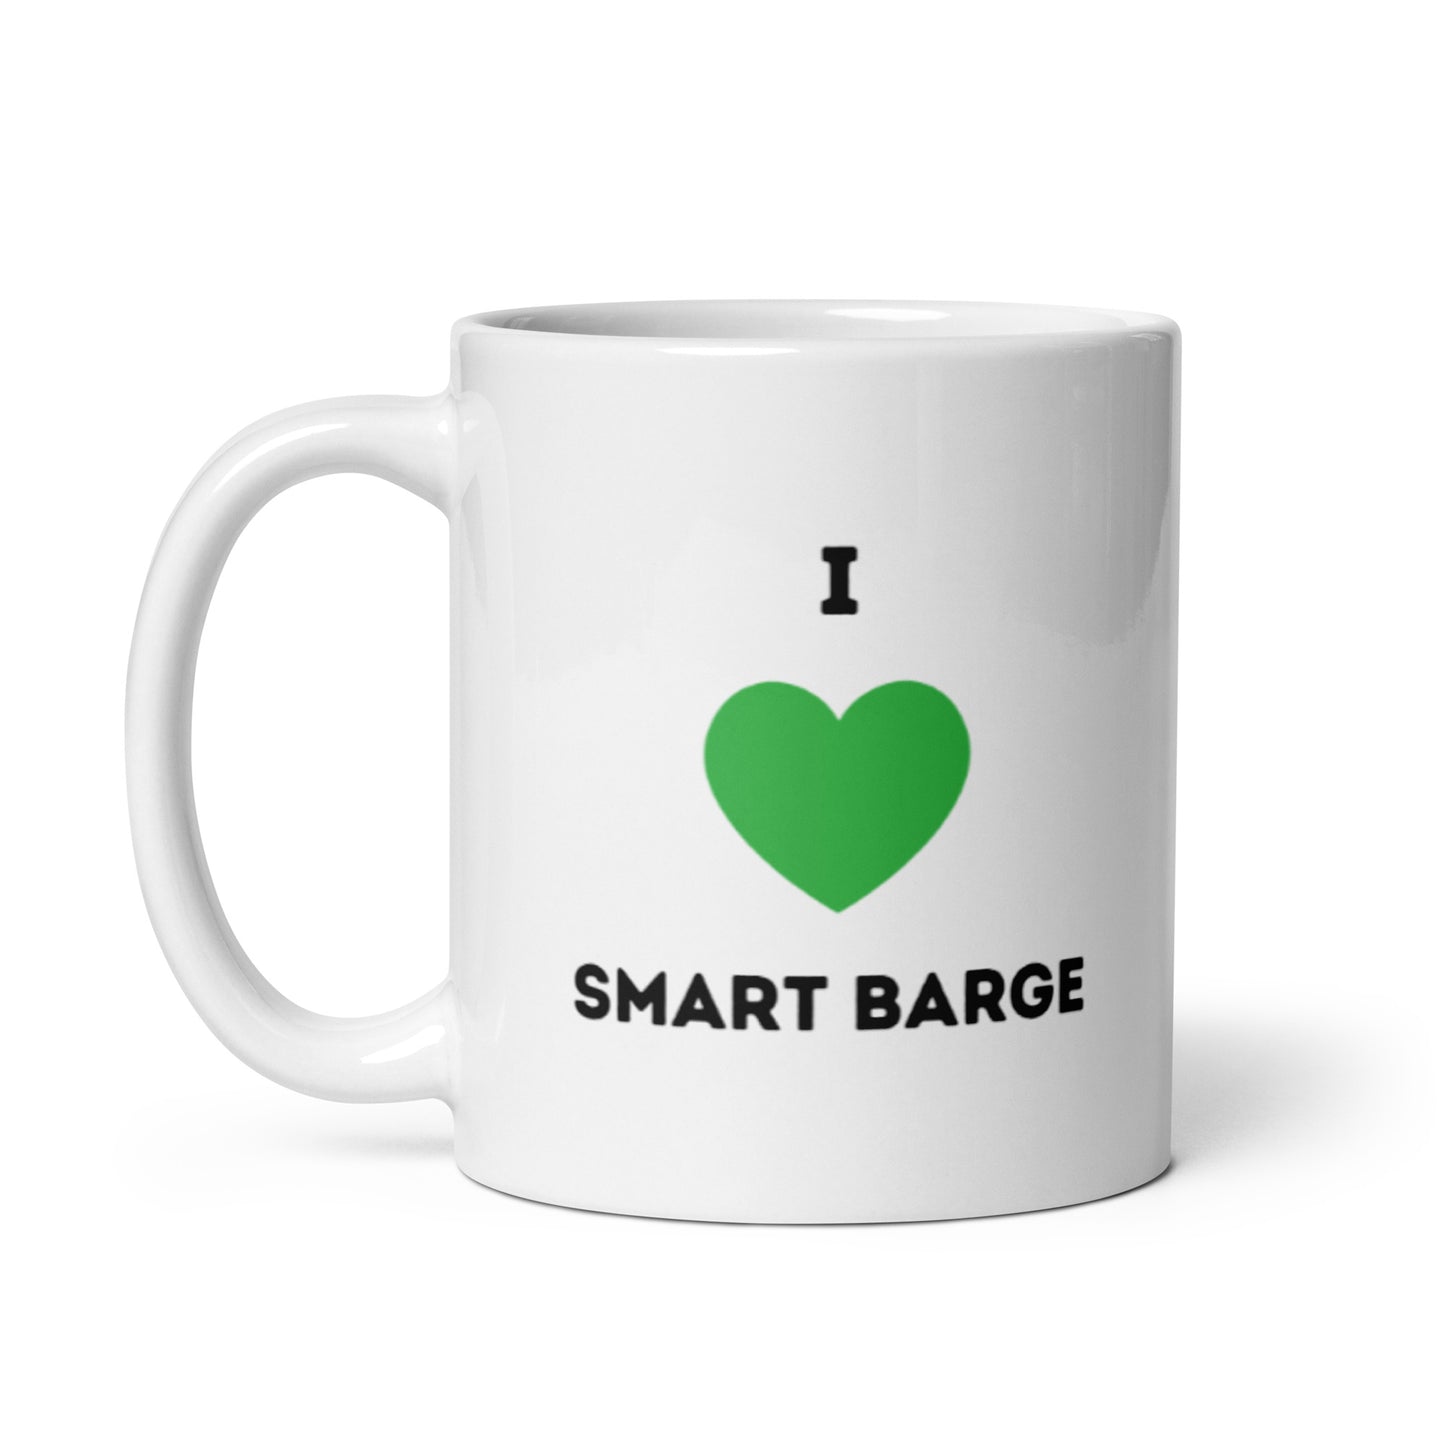 Smart Barge 'Green Heart' Glossy Mug